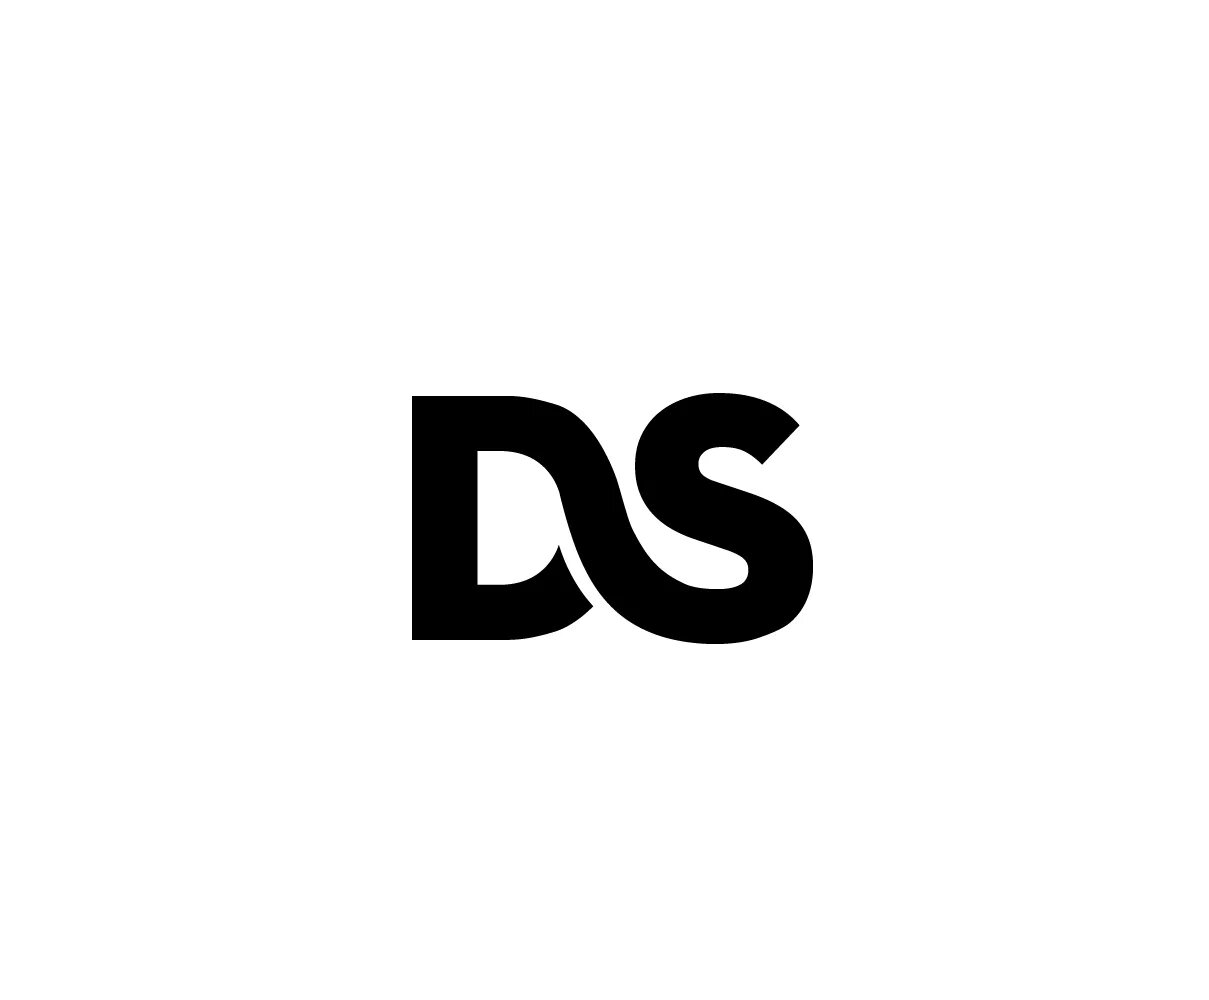 Буквы берг. DS логотип. Логотип с буквами SD. Буква s для логотипа. Надпись DS.